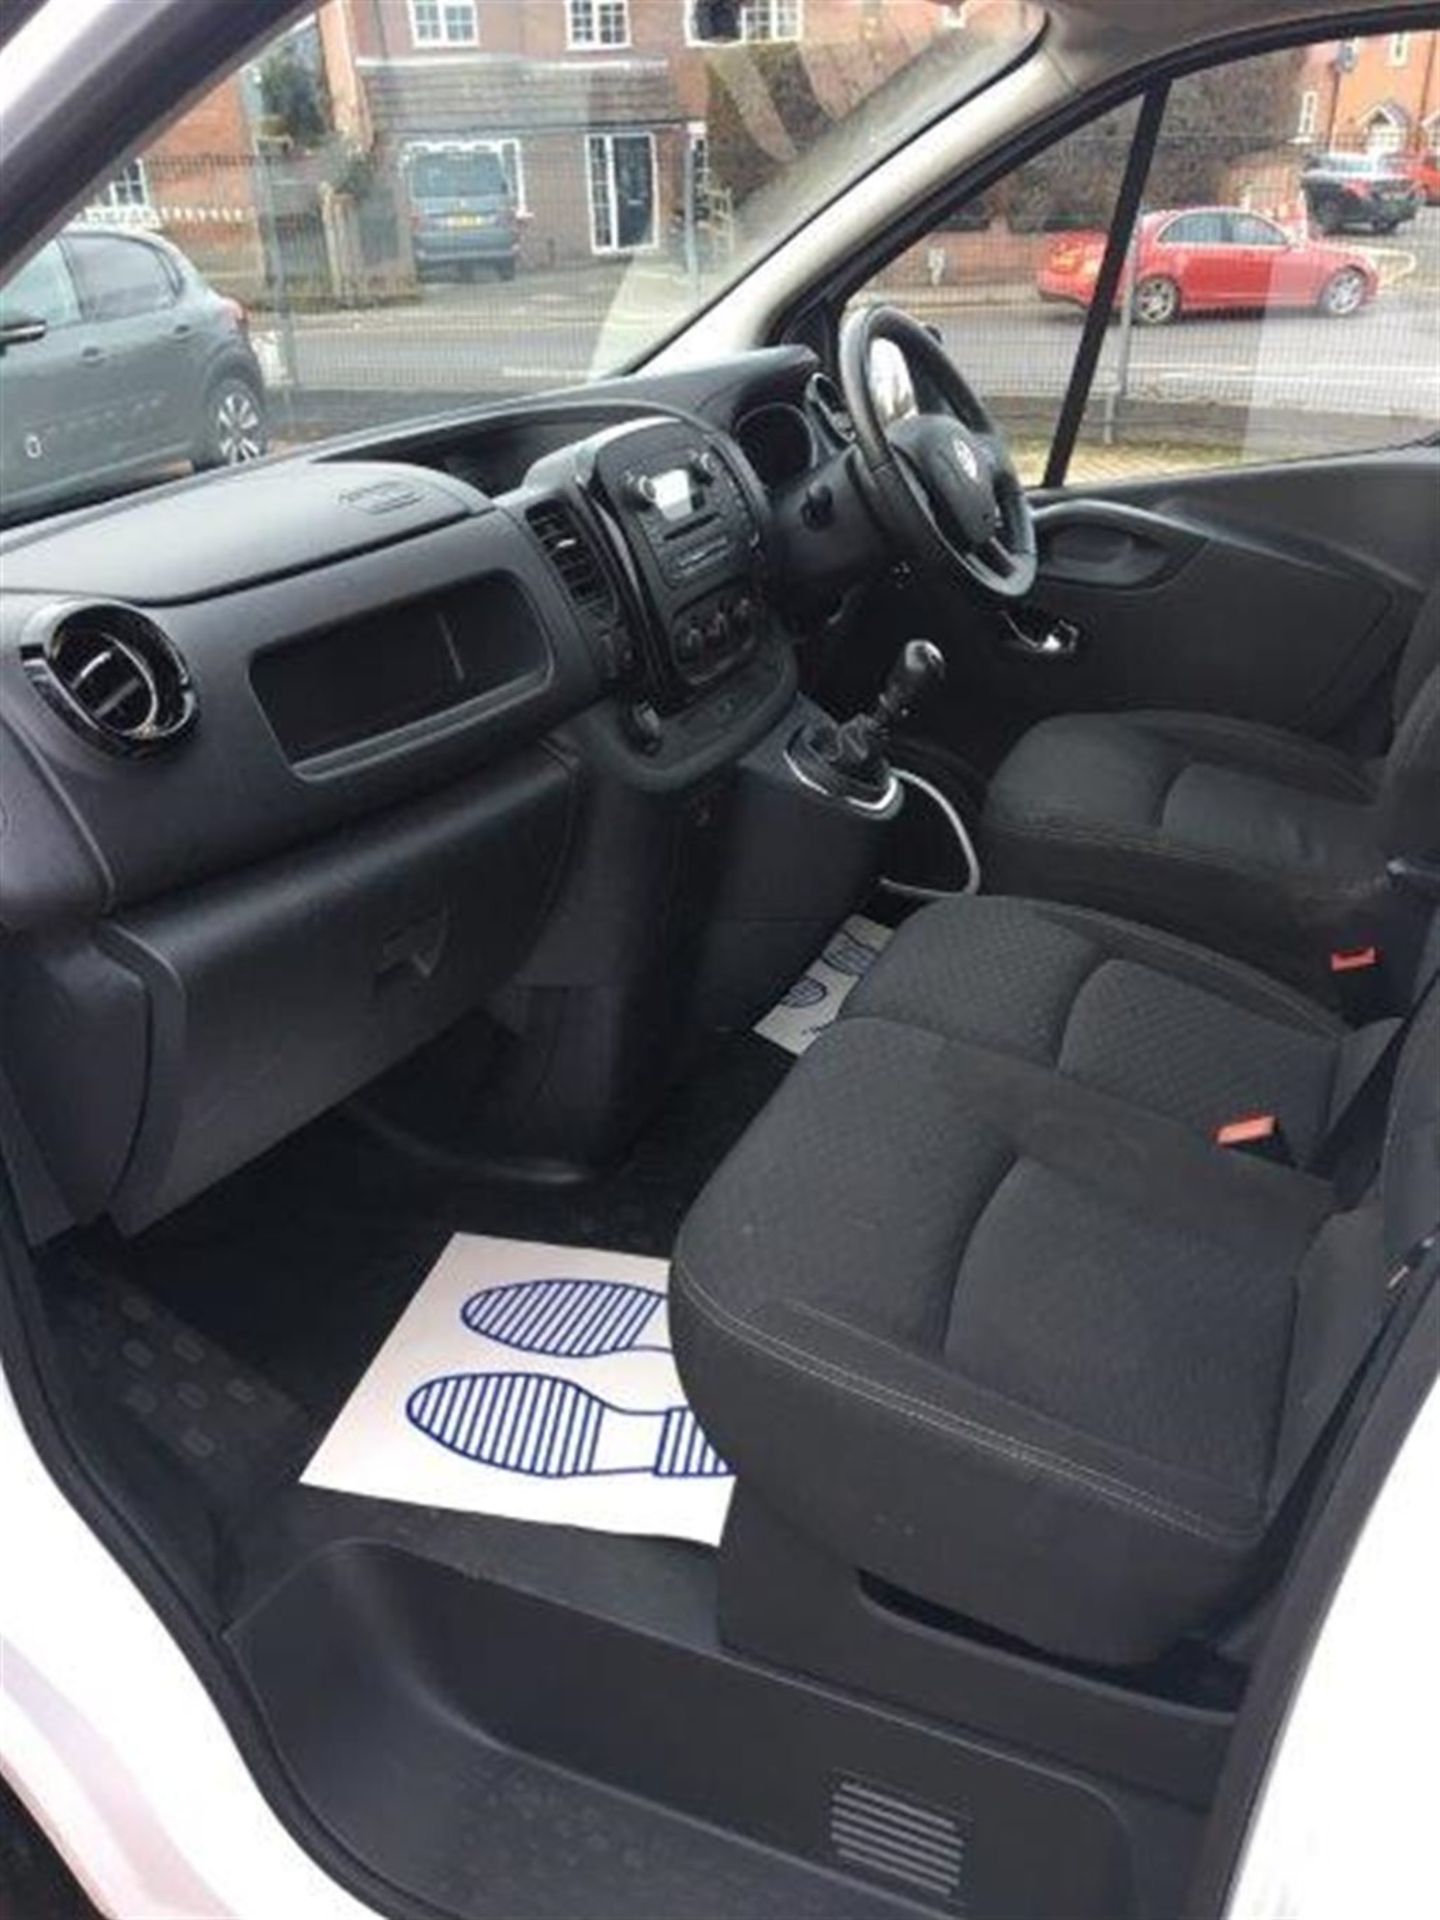 Vauxhall Vivaro L1:H1 1.6 CDTi 115ps Sportive Panel van 2.7t - Image 7 of 9